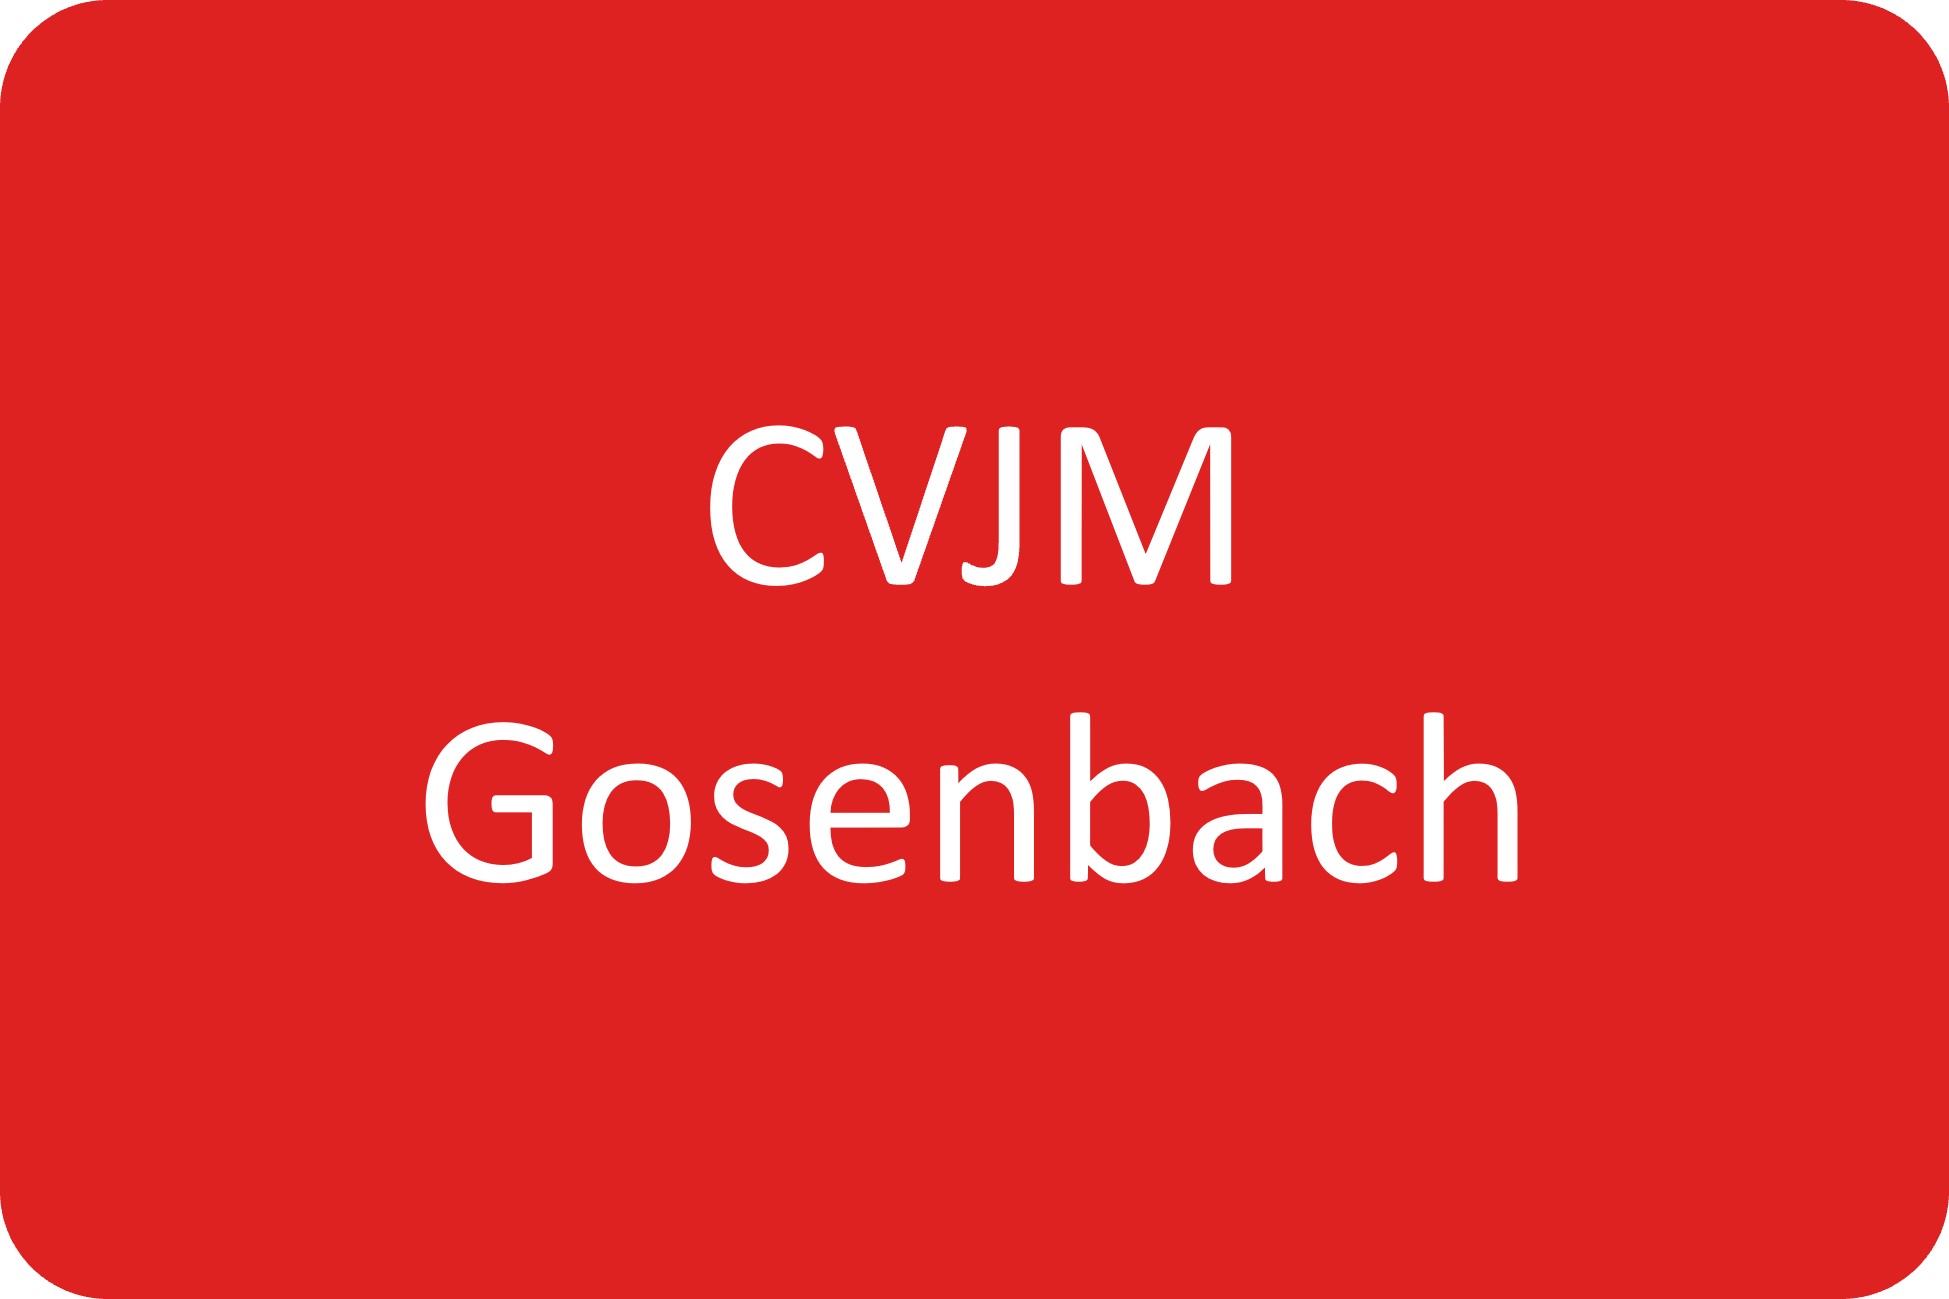 CVJM Gosenbach